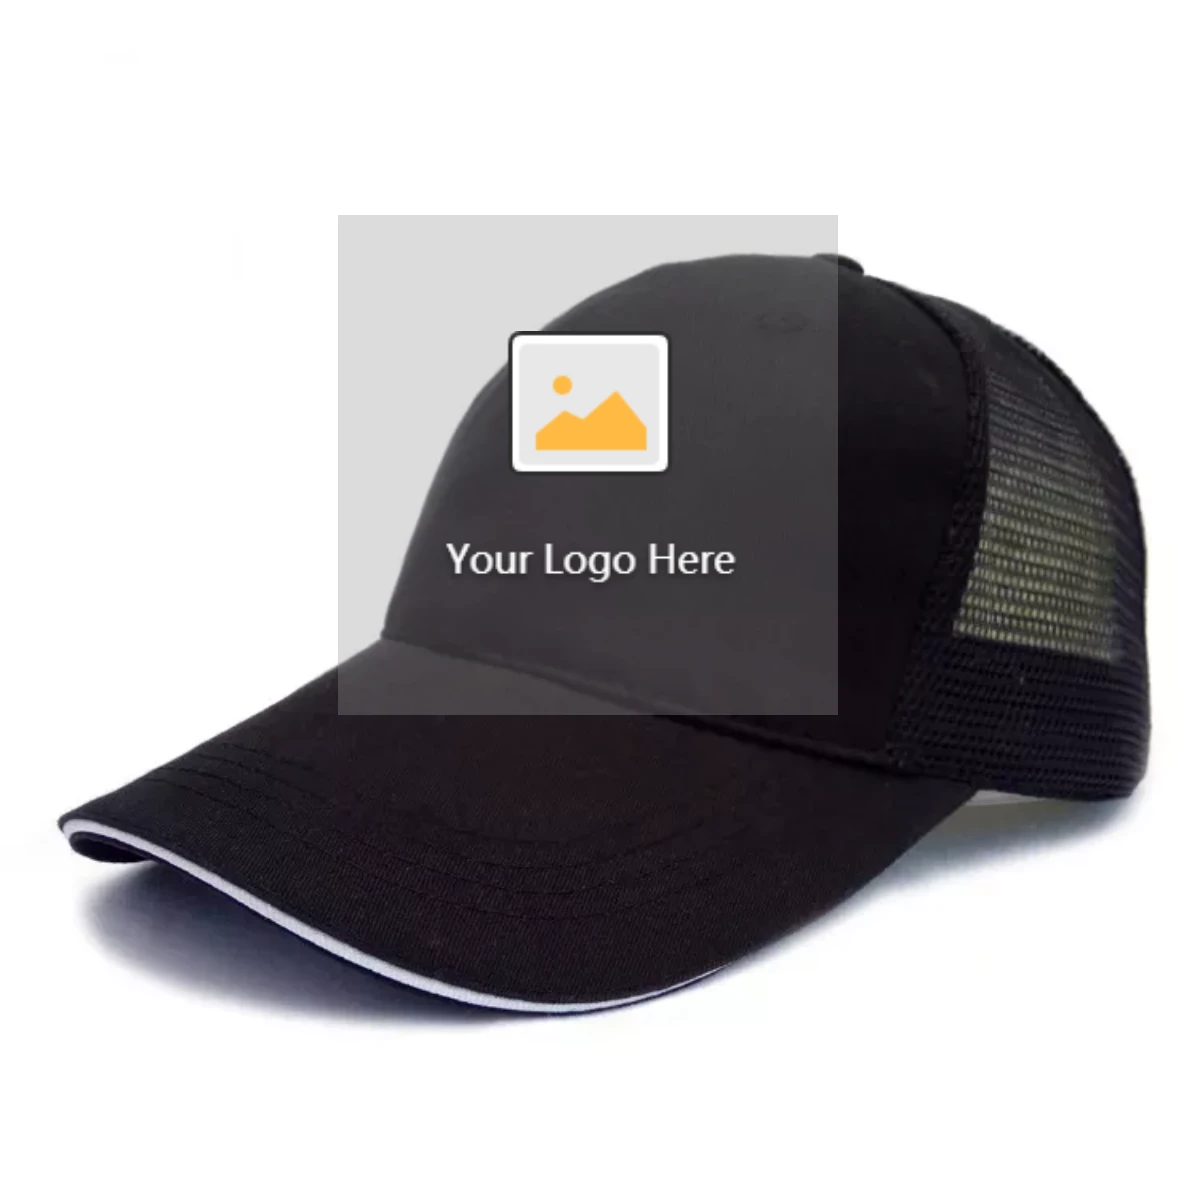 Embroidery custom your logo 20 pcs Minimum order quantity 6 panel custom baseball cap hats